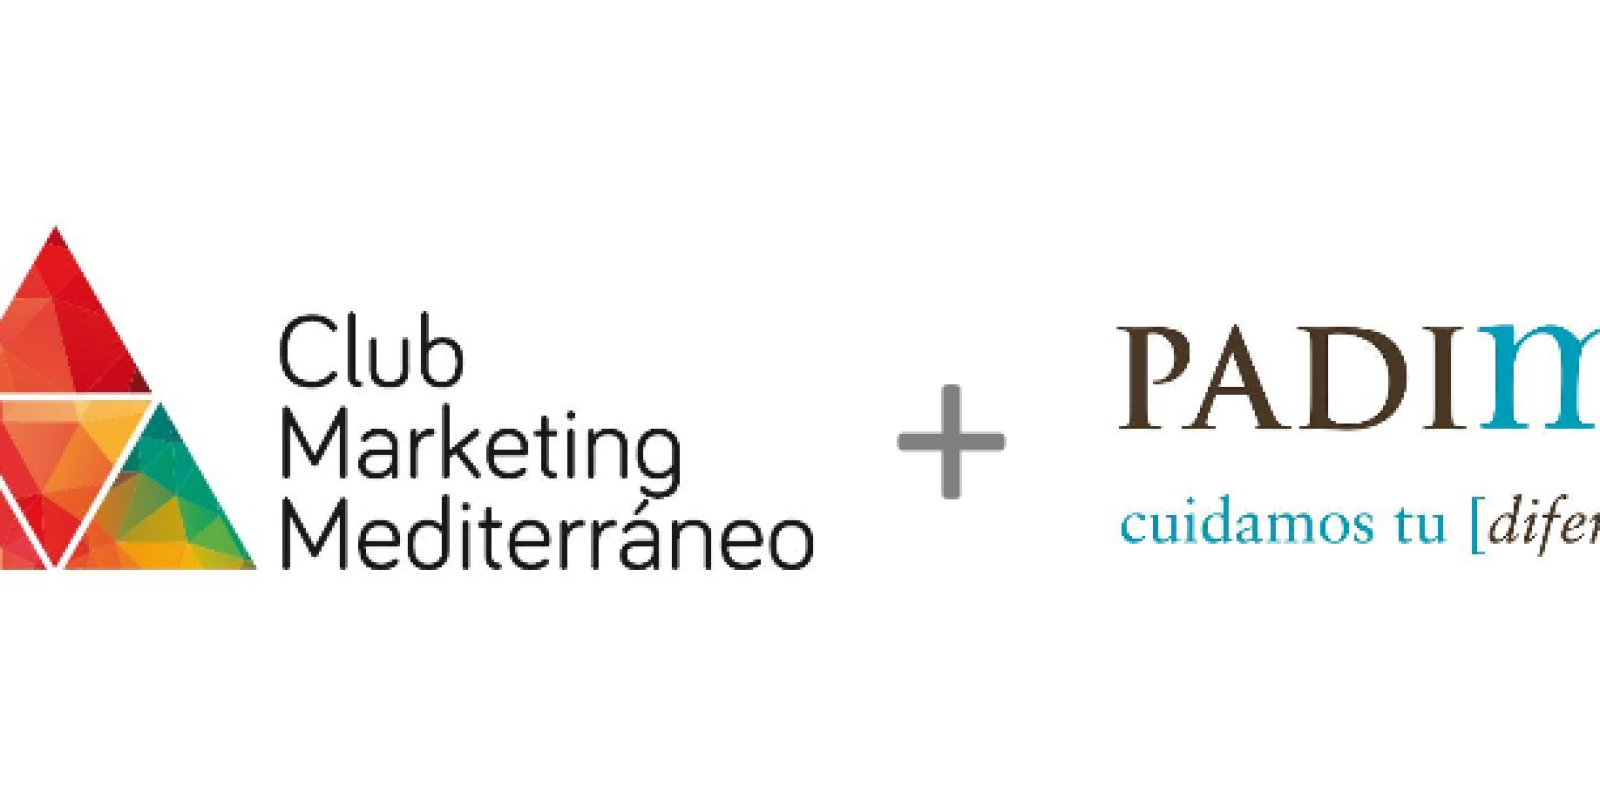 Primer encuentro Club Marketing Mediterráneo y Padima